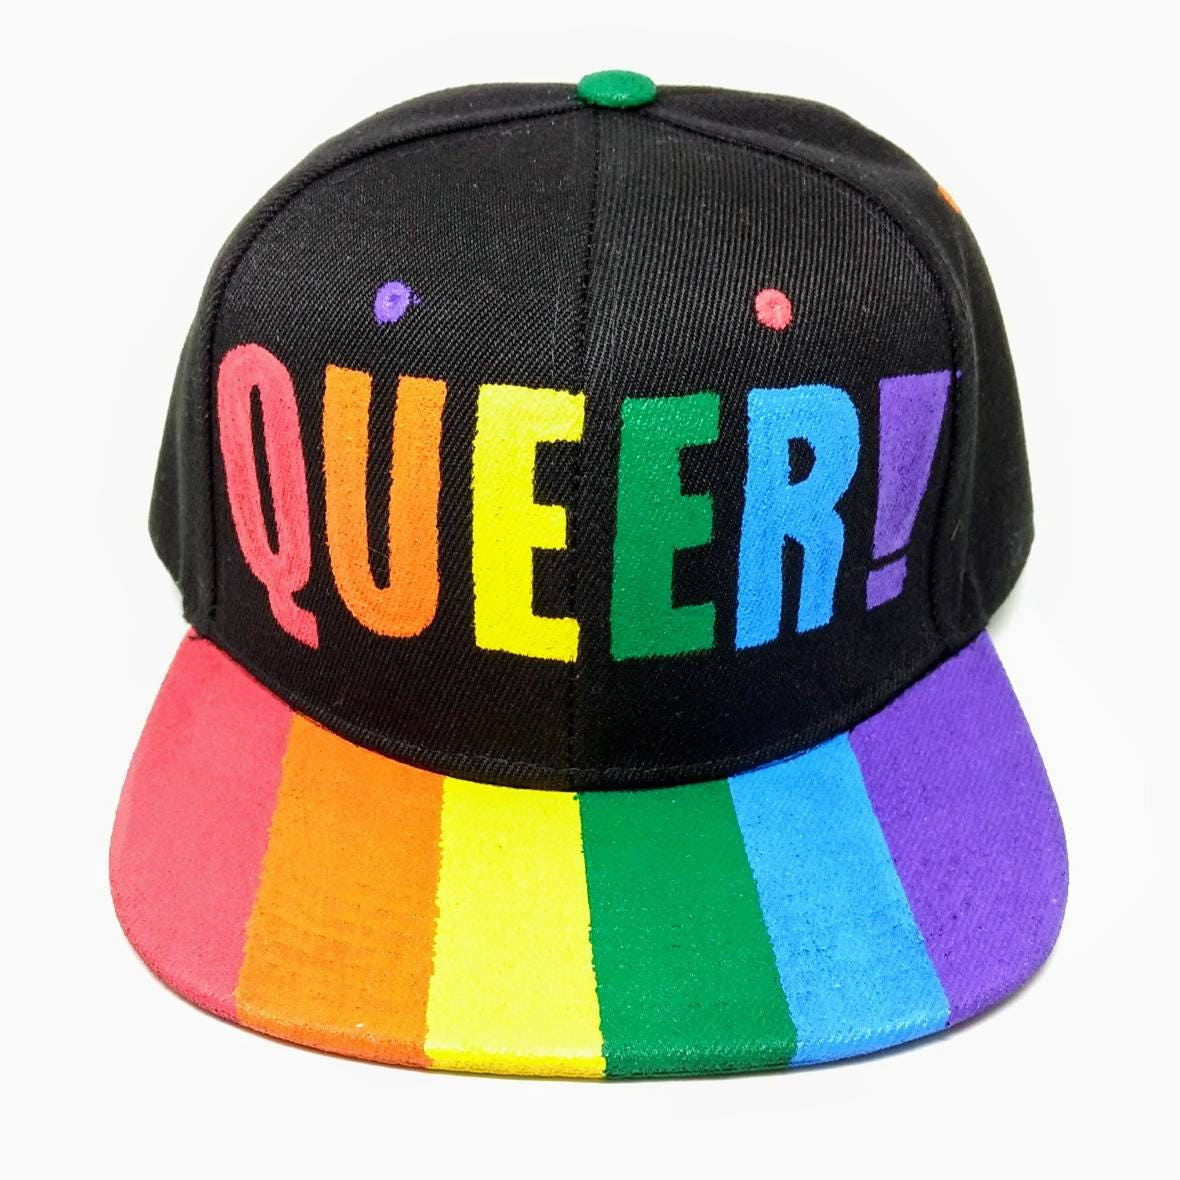 atlanta braves gay pride hat